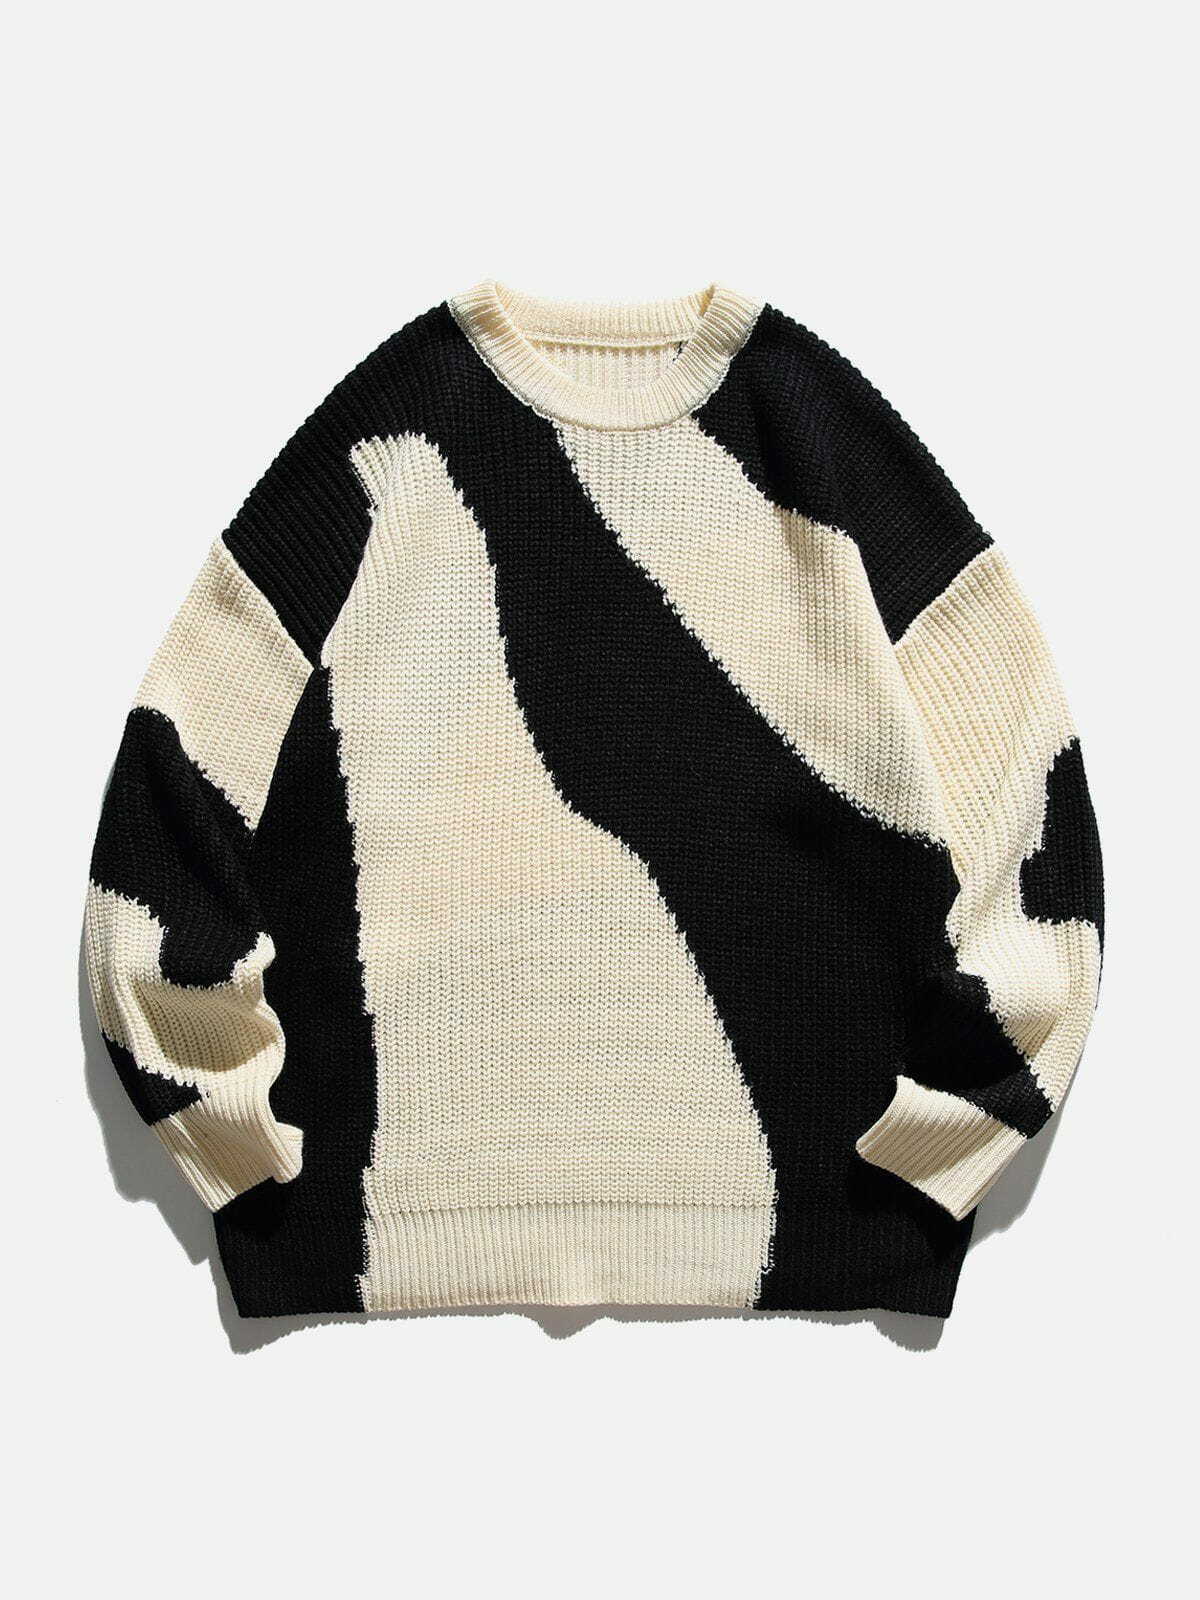 irregular contrast sweater edgy & urban streetwear icon 1633